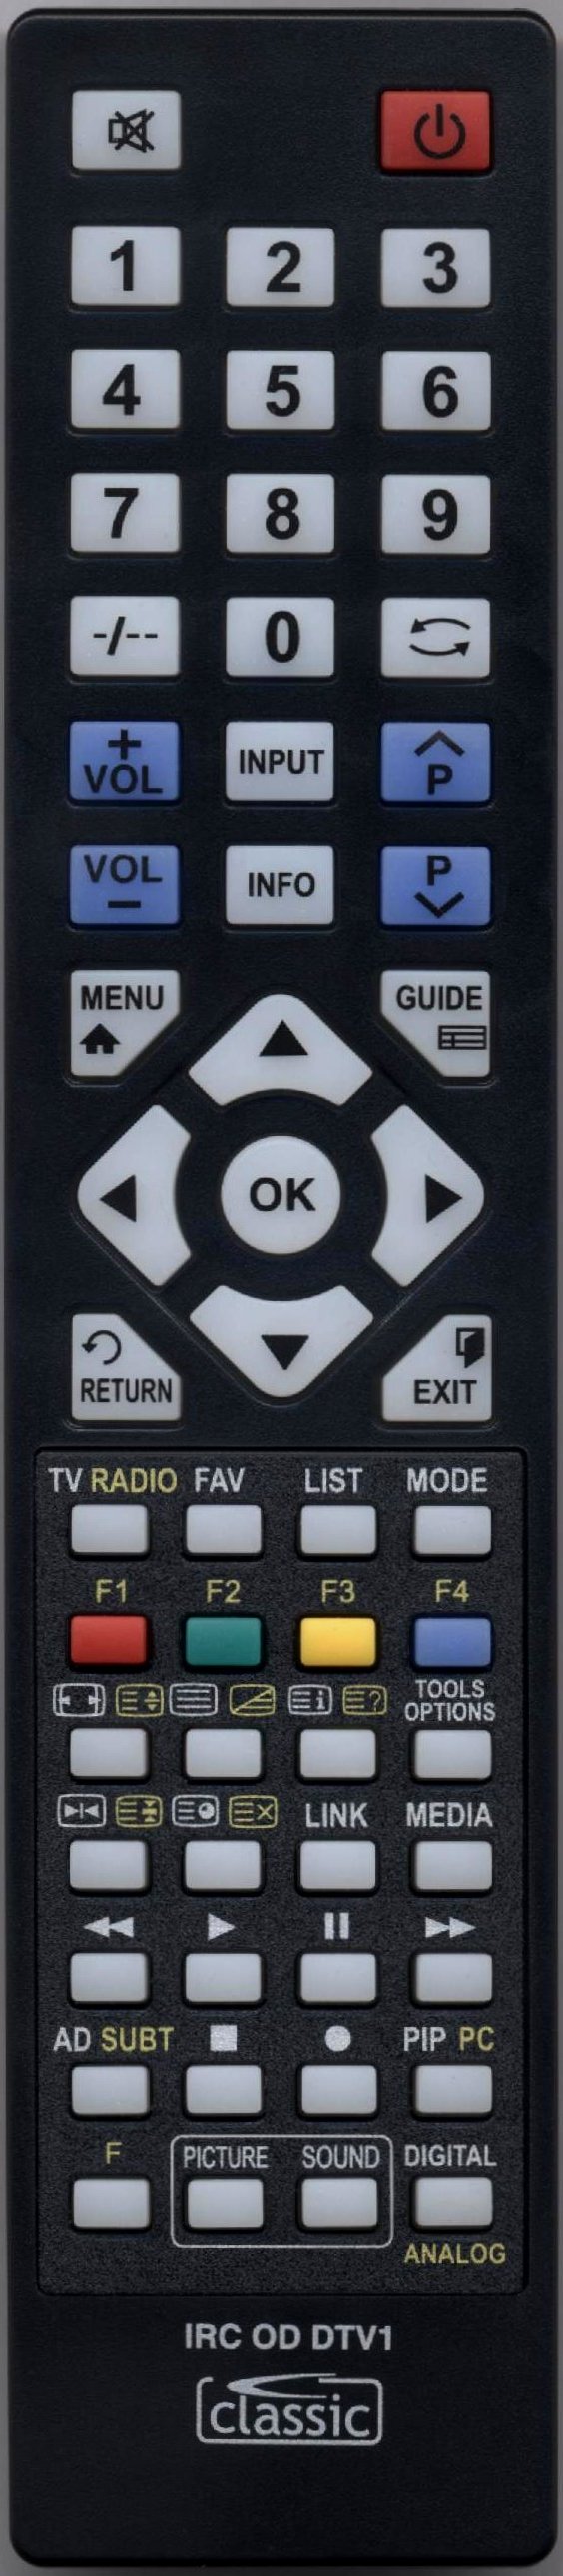 TEVION MD31134 Remote Control Alternative